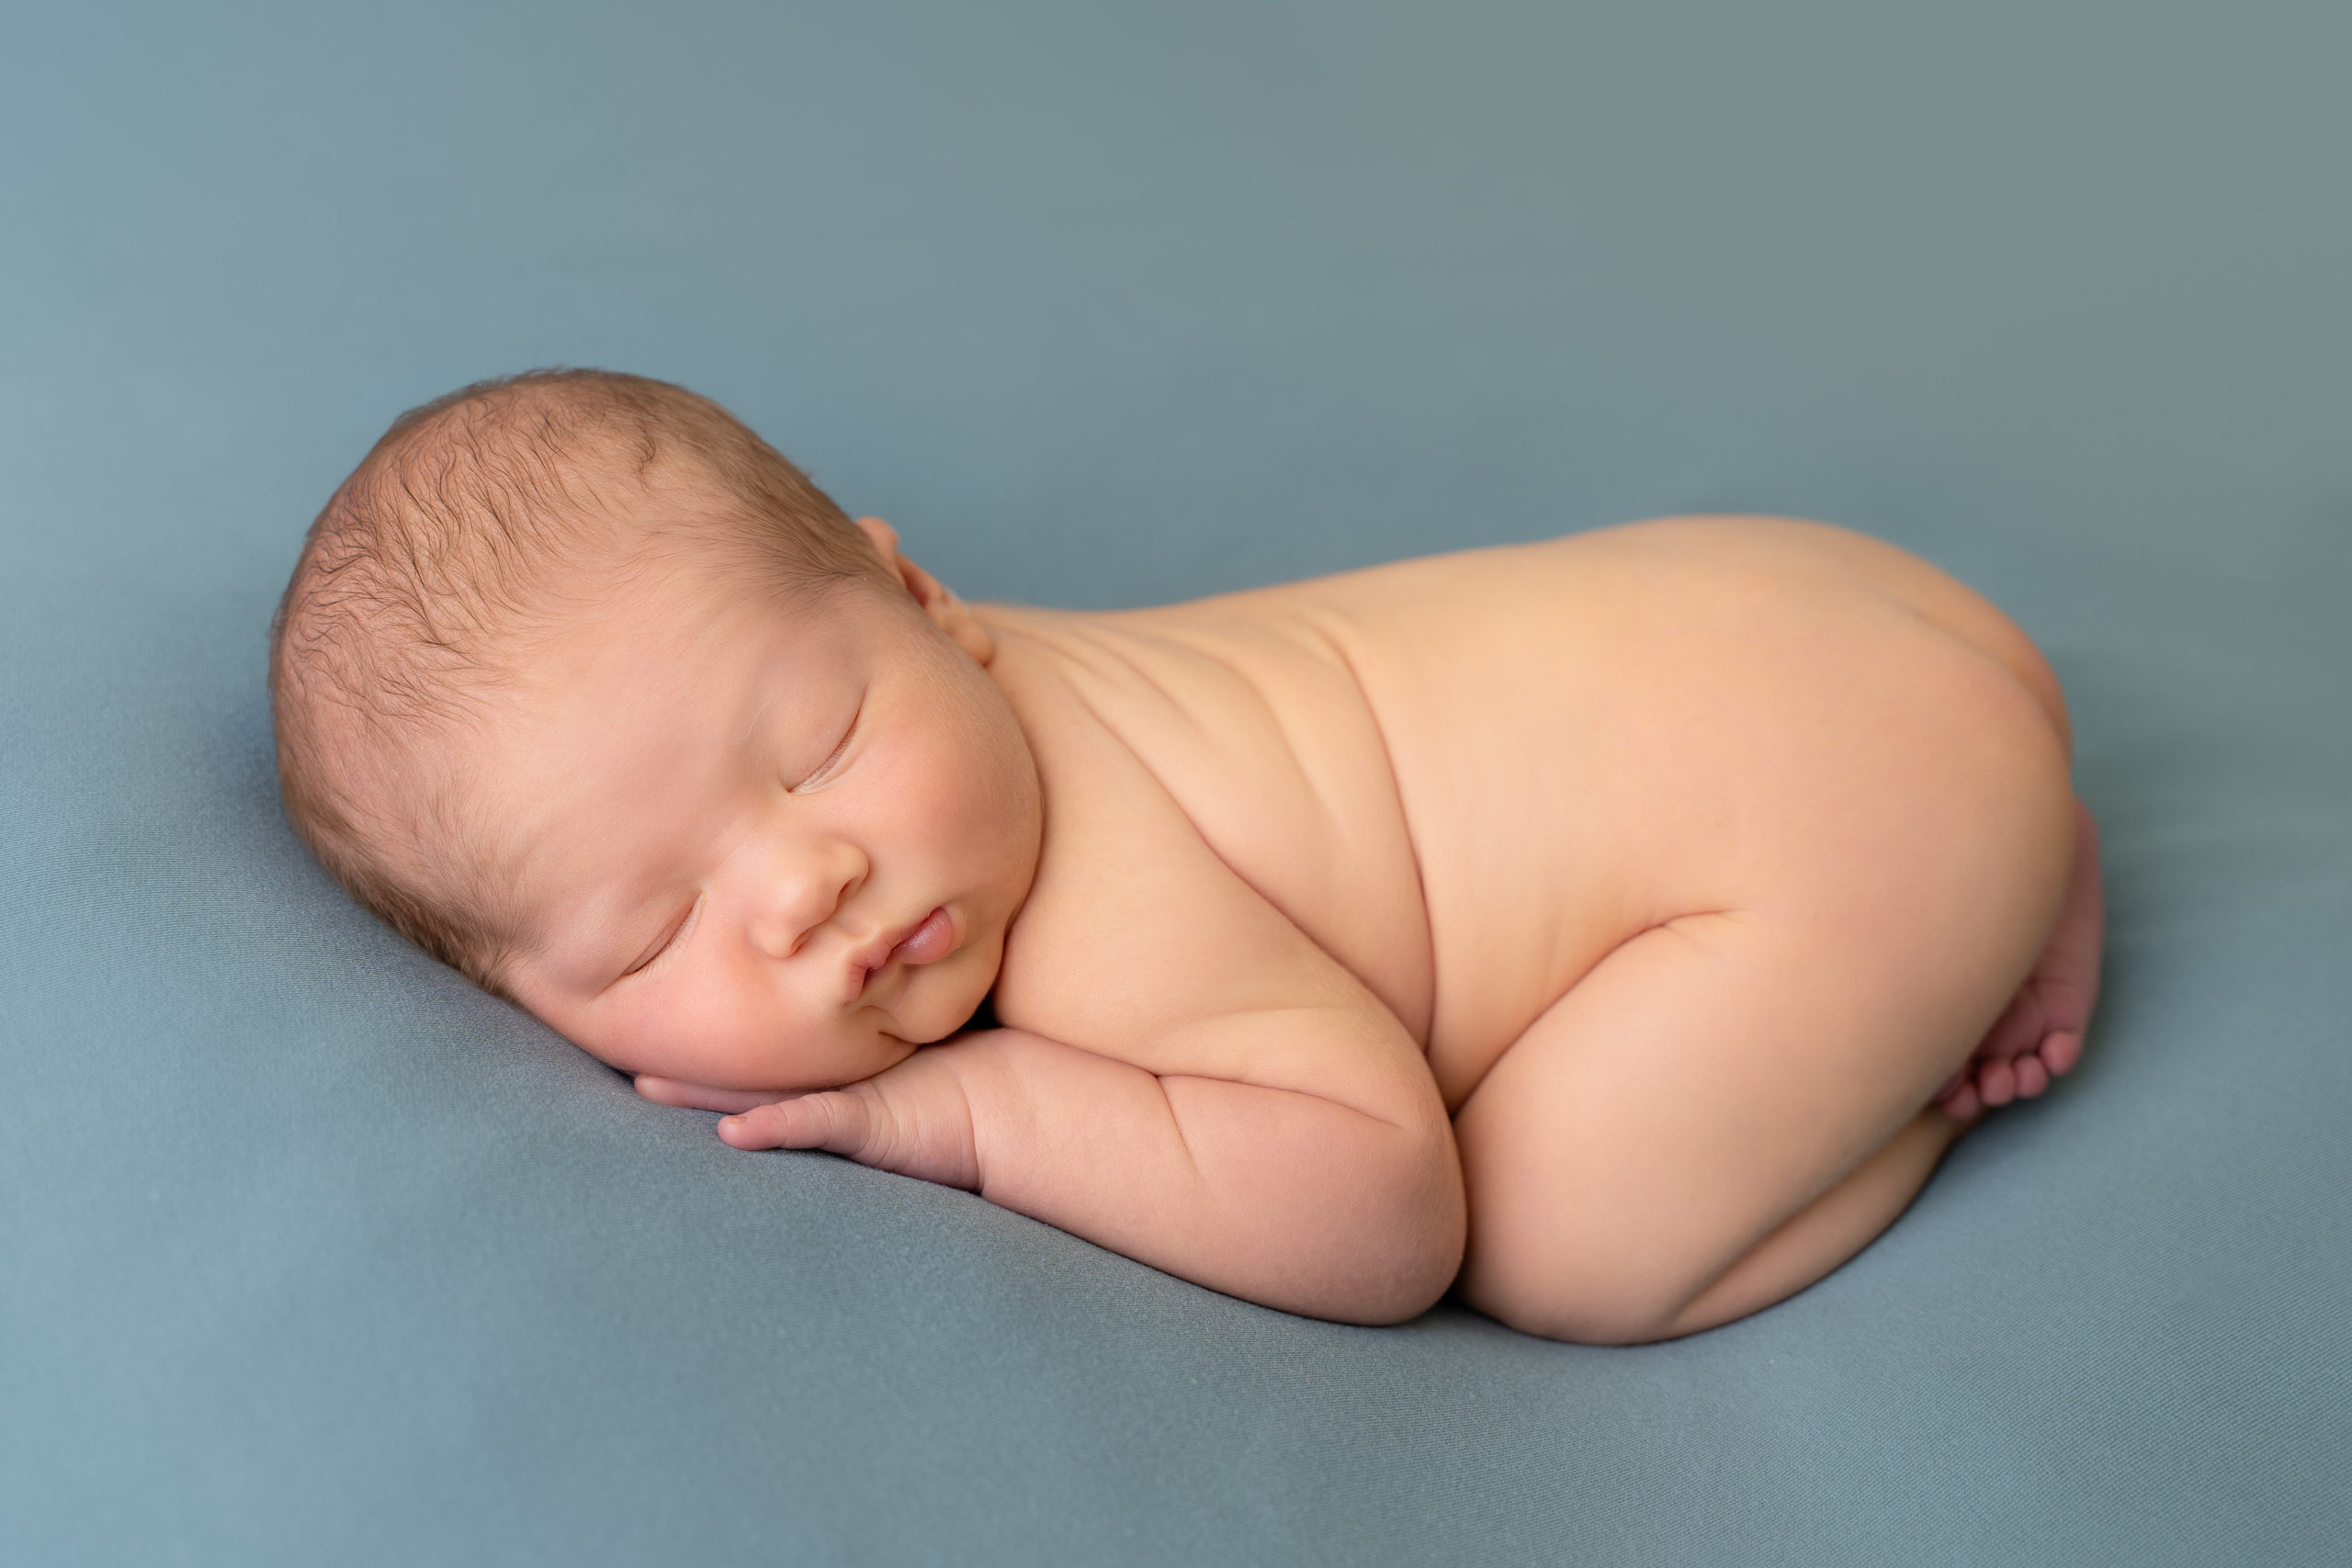 professional newborn photo of newborn baby naked on teal blanket in bum up pose by newborn photographer edinburgh beautiful bairns